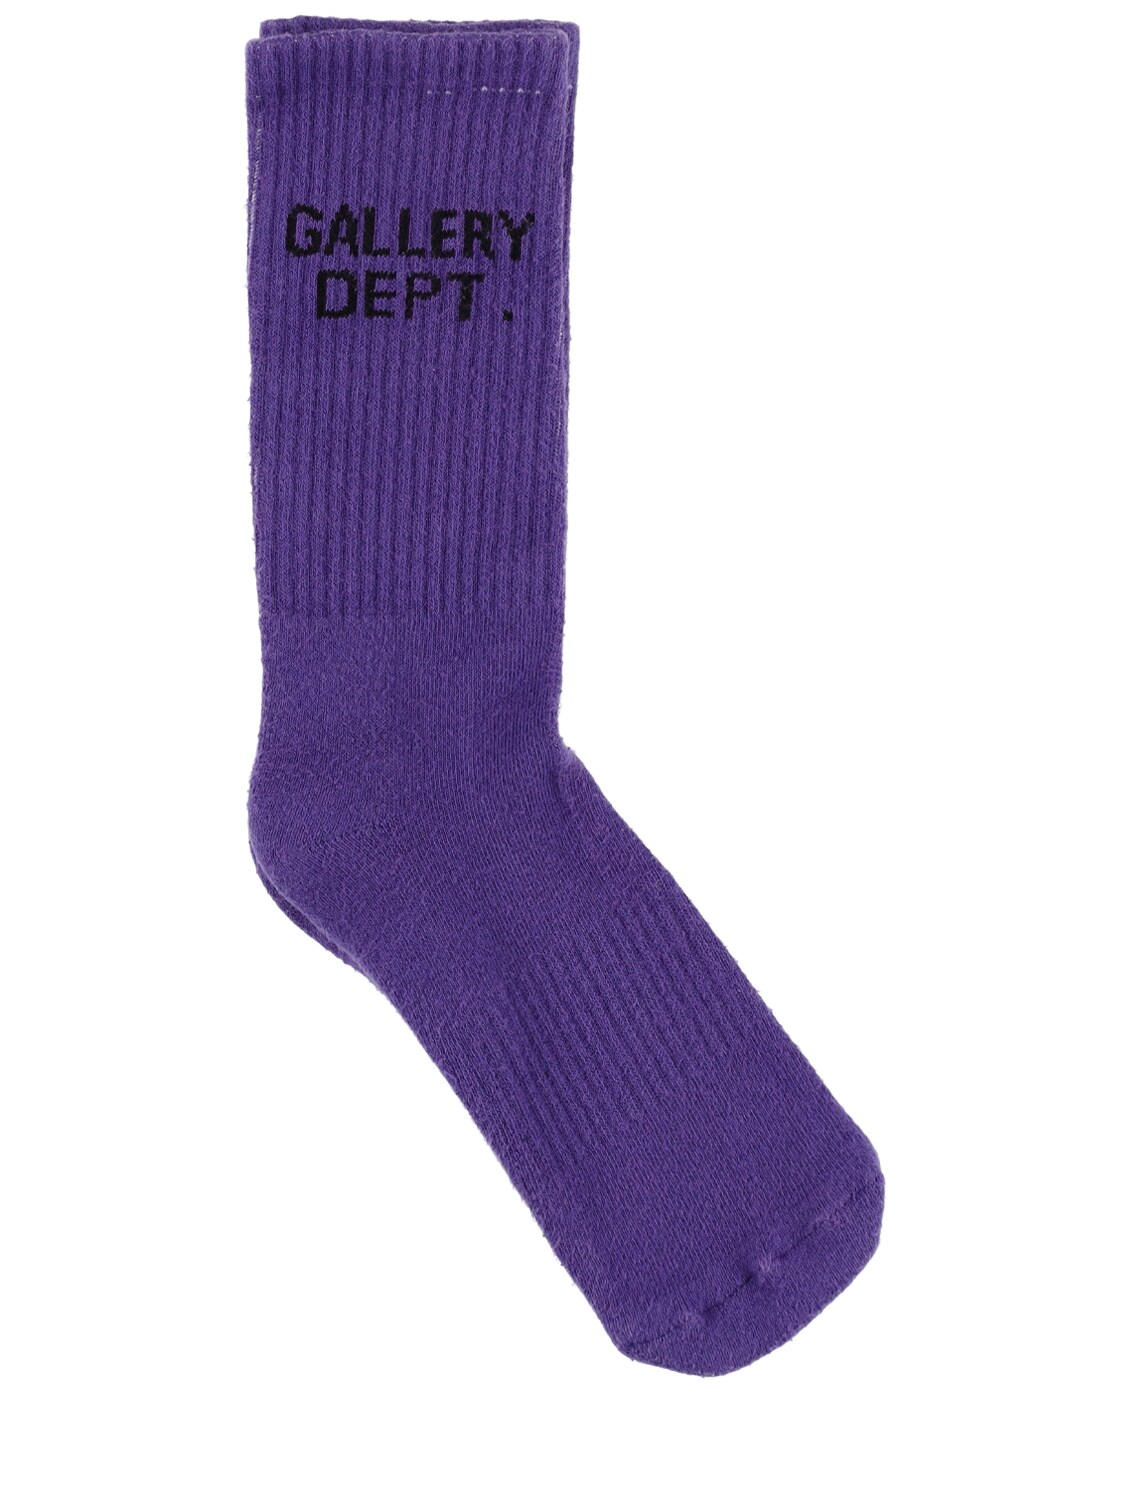 GALLERY DEPT. Logo Cotton Blend Socks